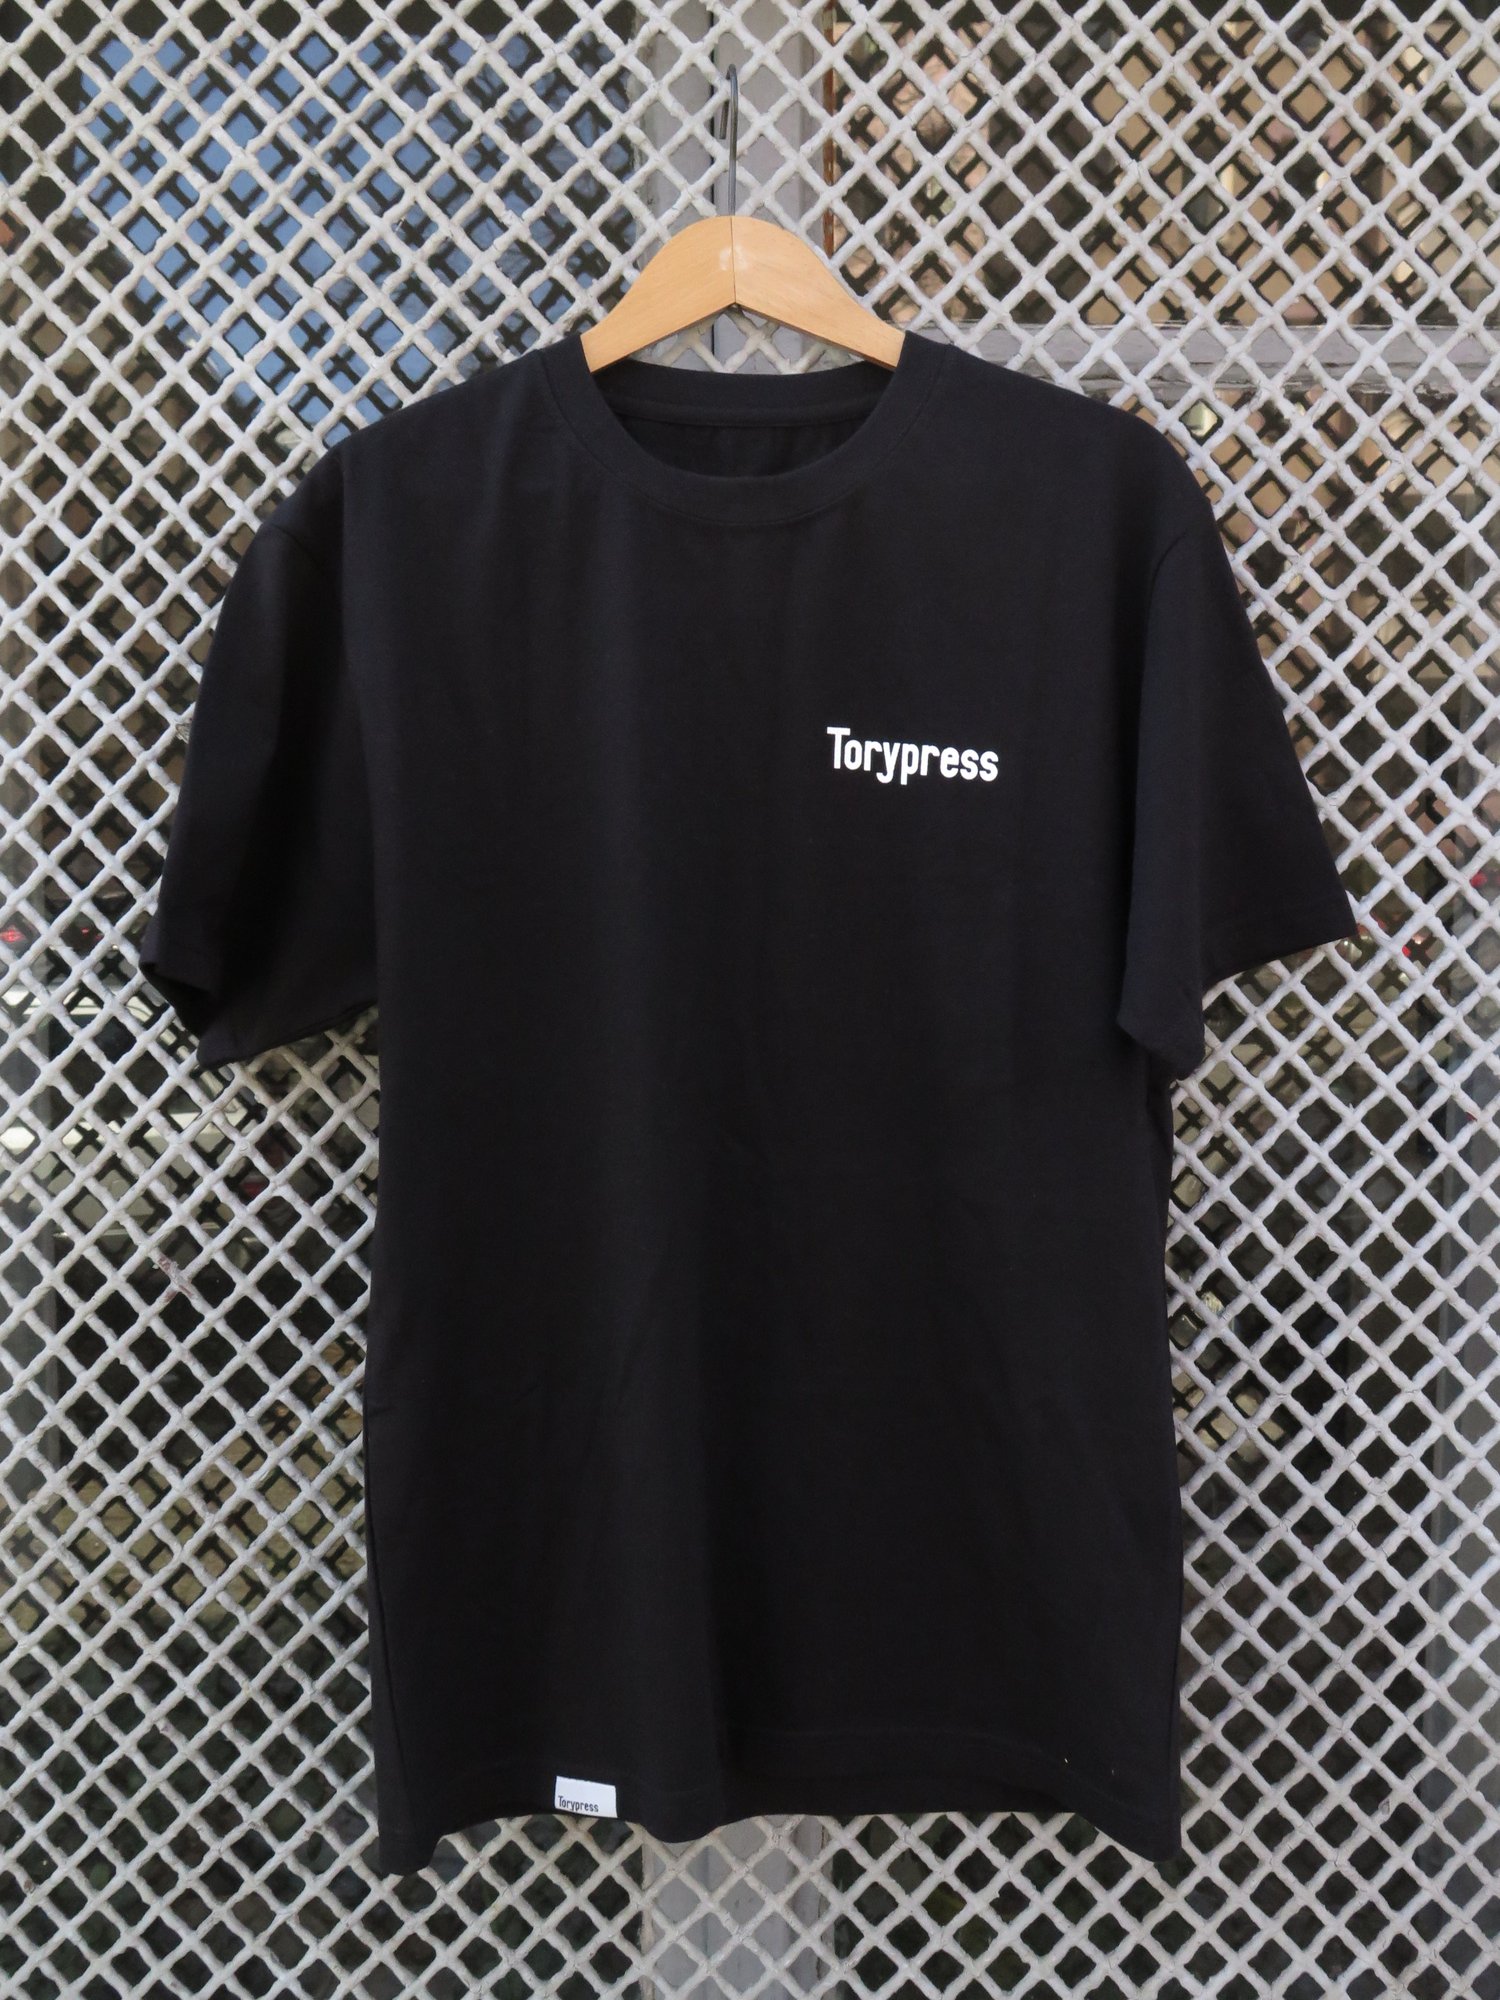 Torypress T-shirt